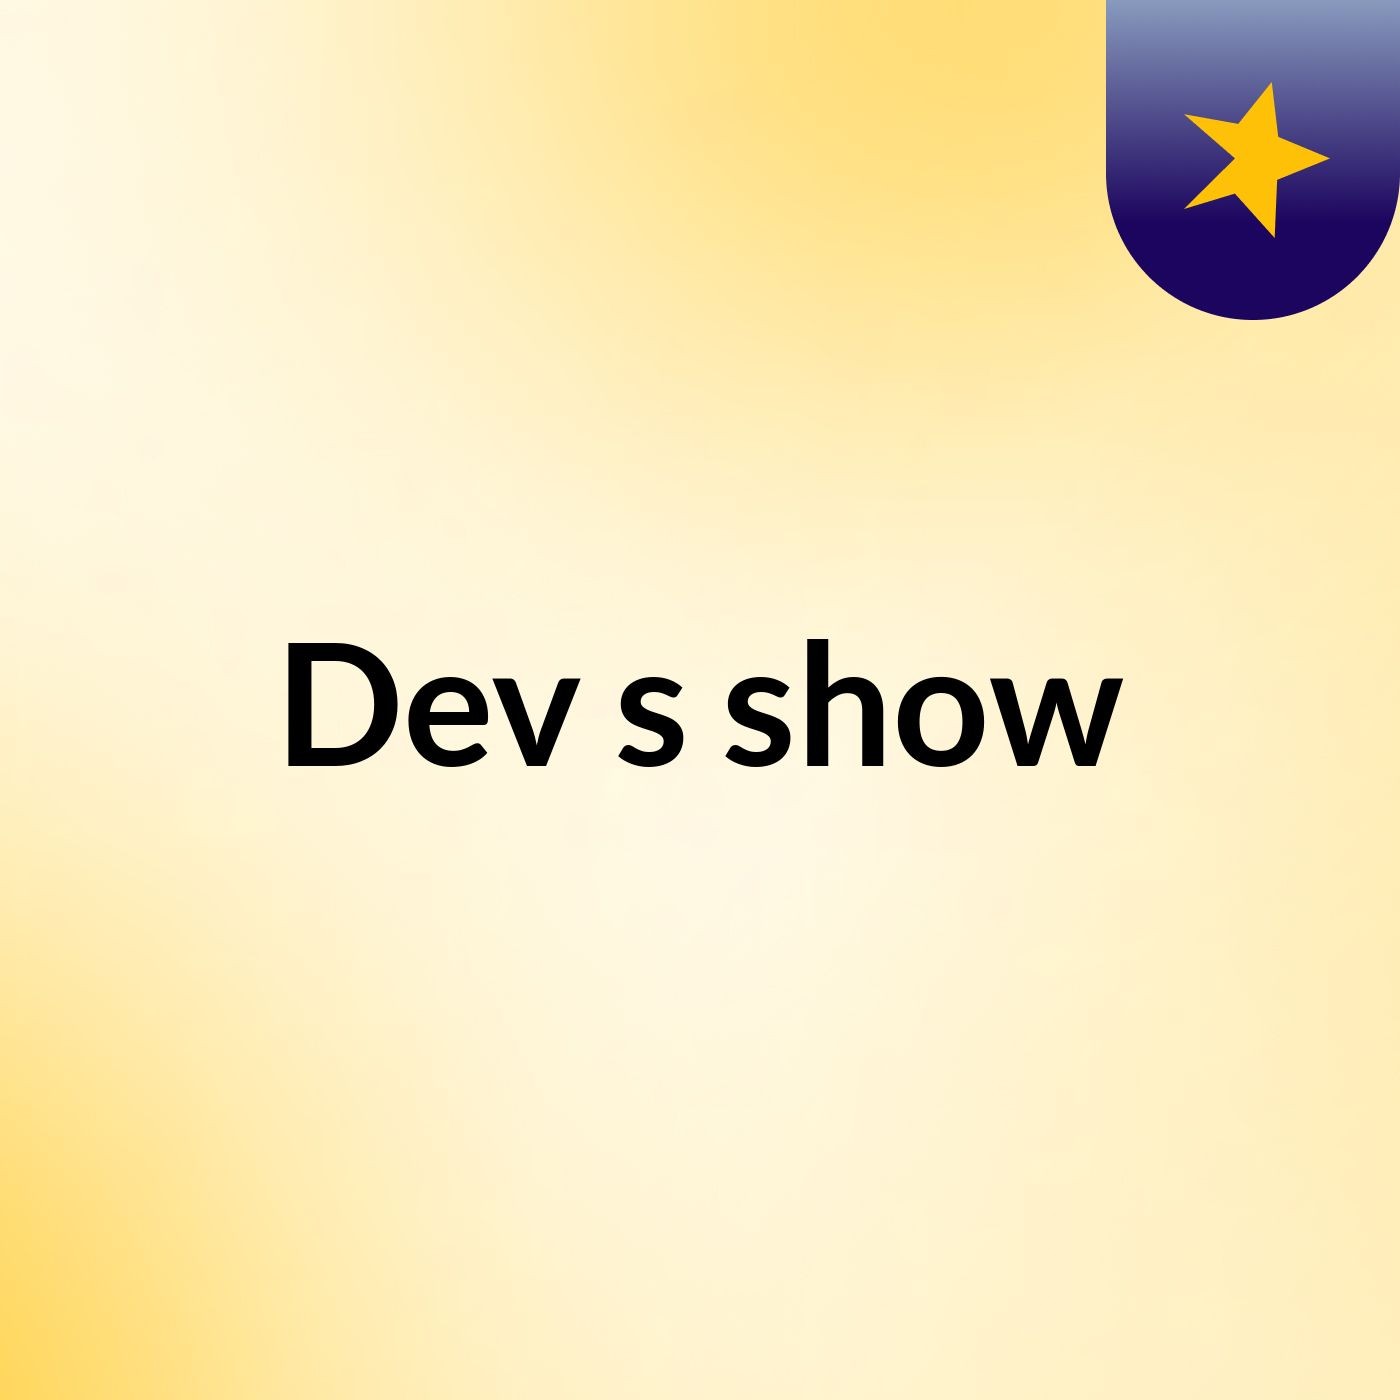 Dev's show